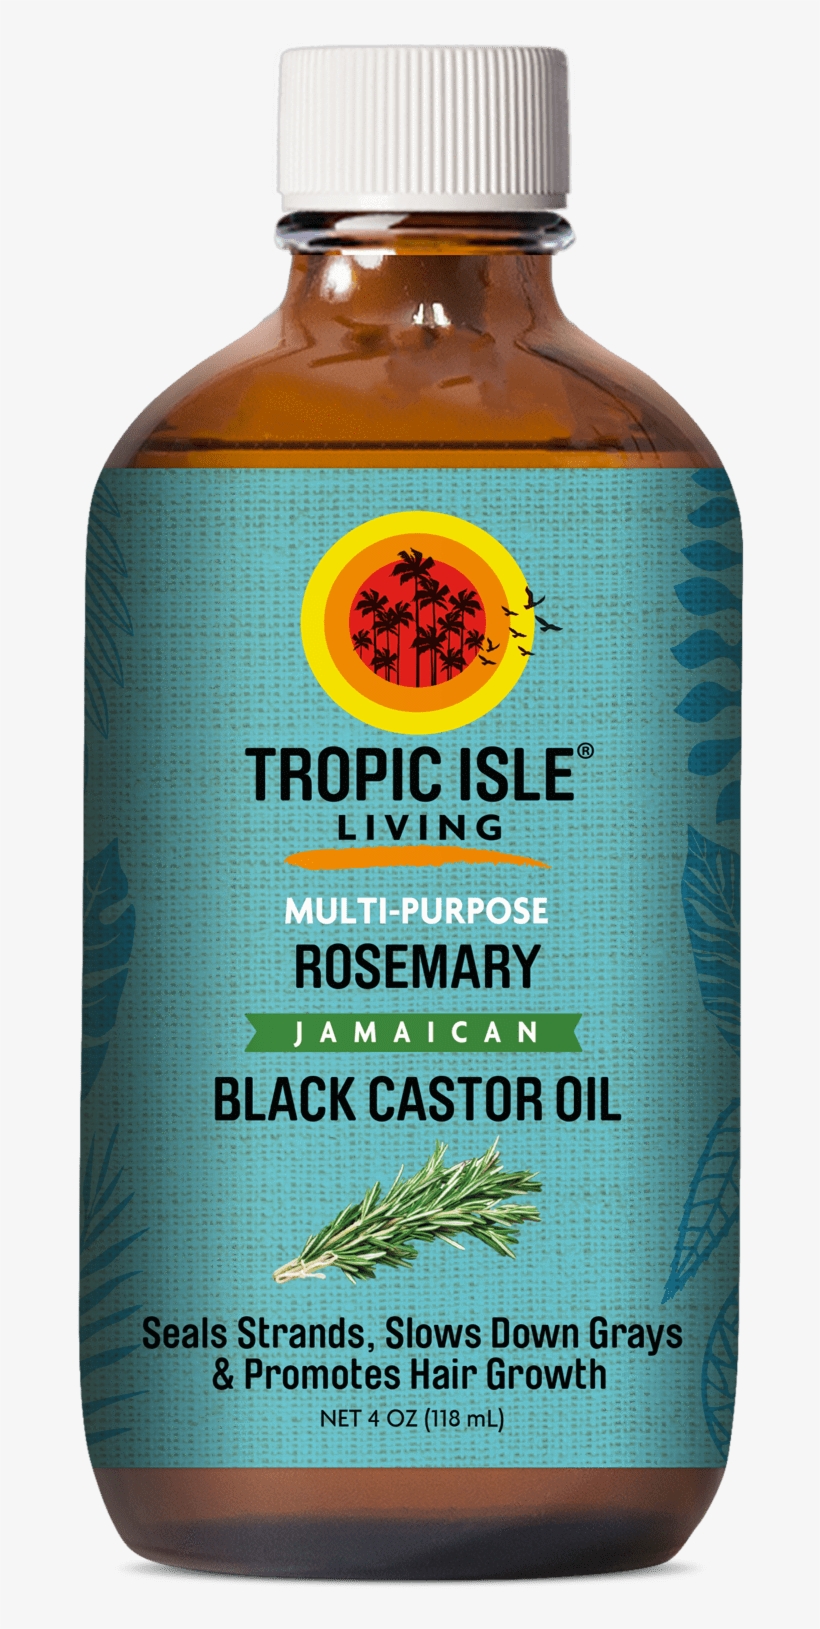 Rosemary Jamaican Black Castor Oil - Tropic Isle Living Black Castor Oil, transparent png #648458